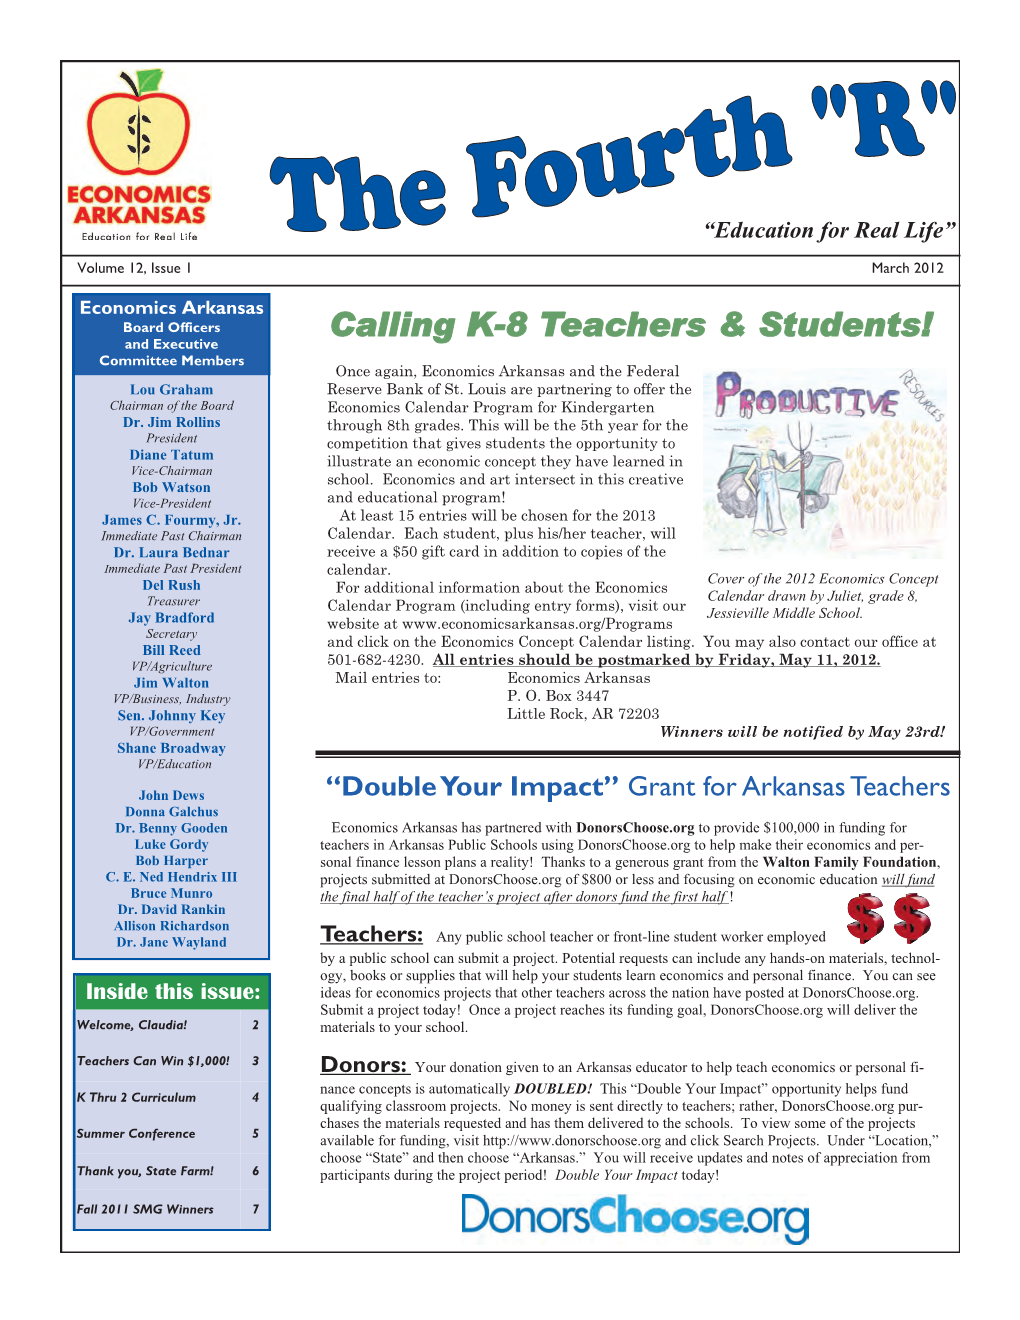 Calling K-8 Teachers & Students!